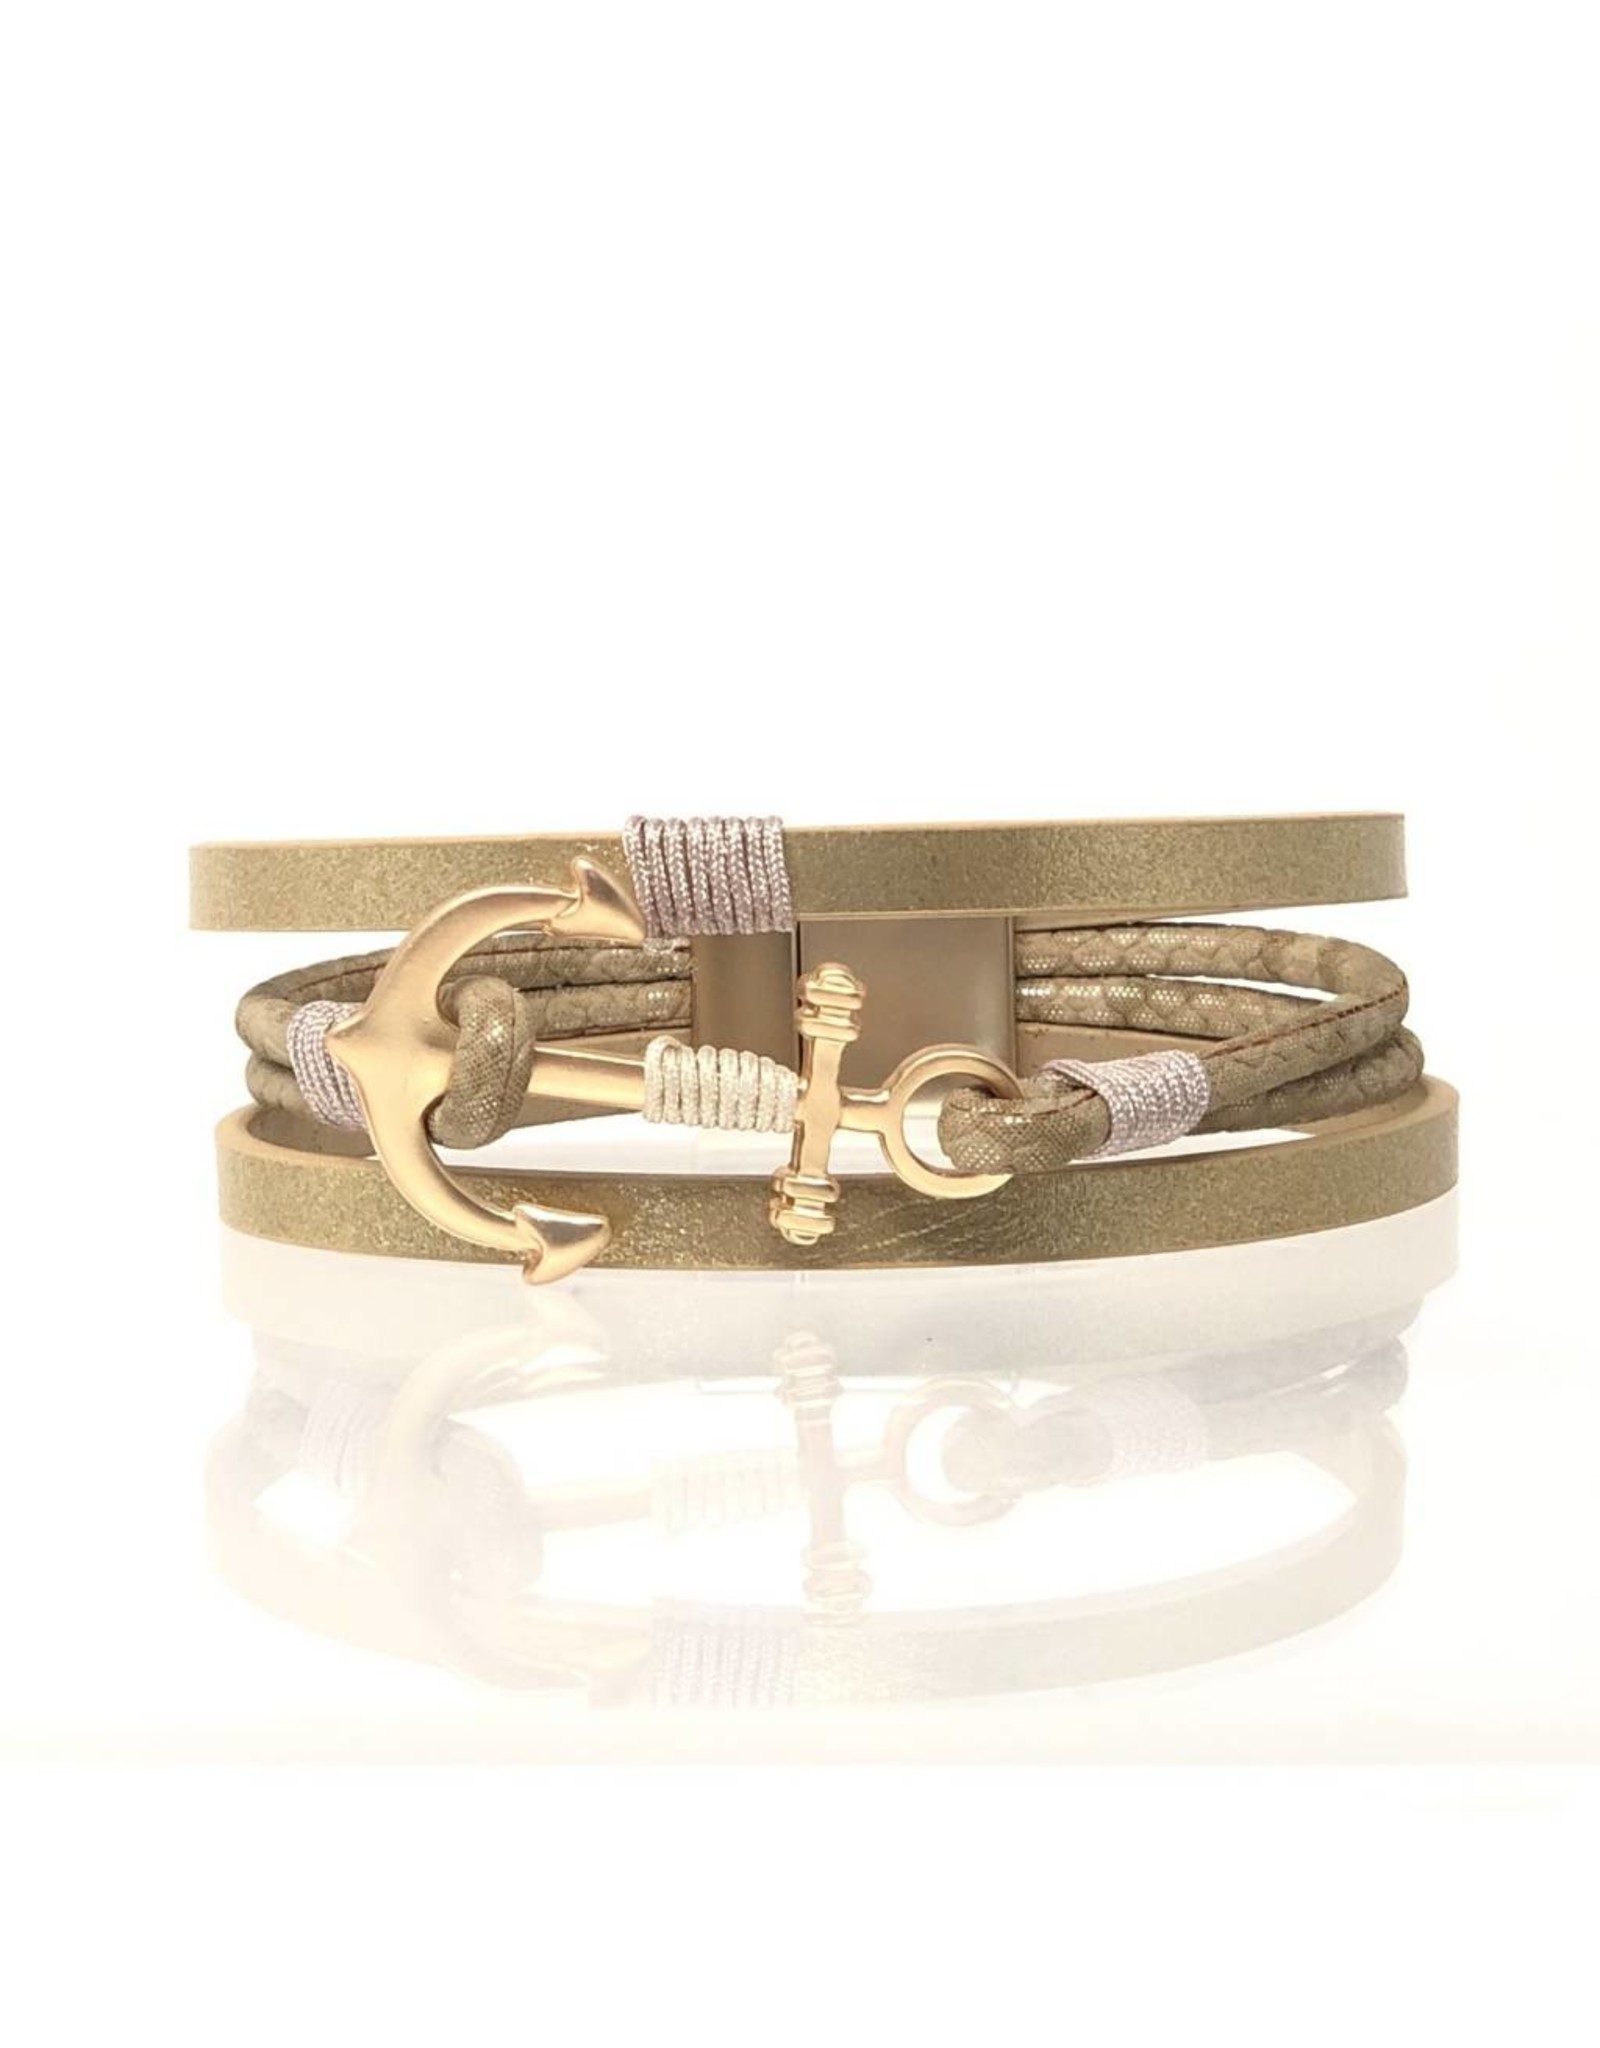 Sunrise USA Trading Anchor Magnetic Bracelet Gold